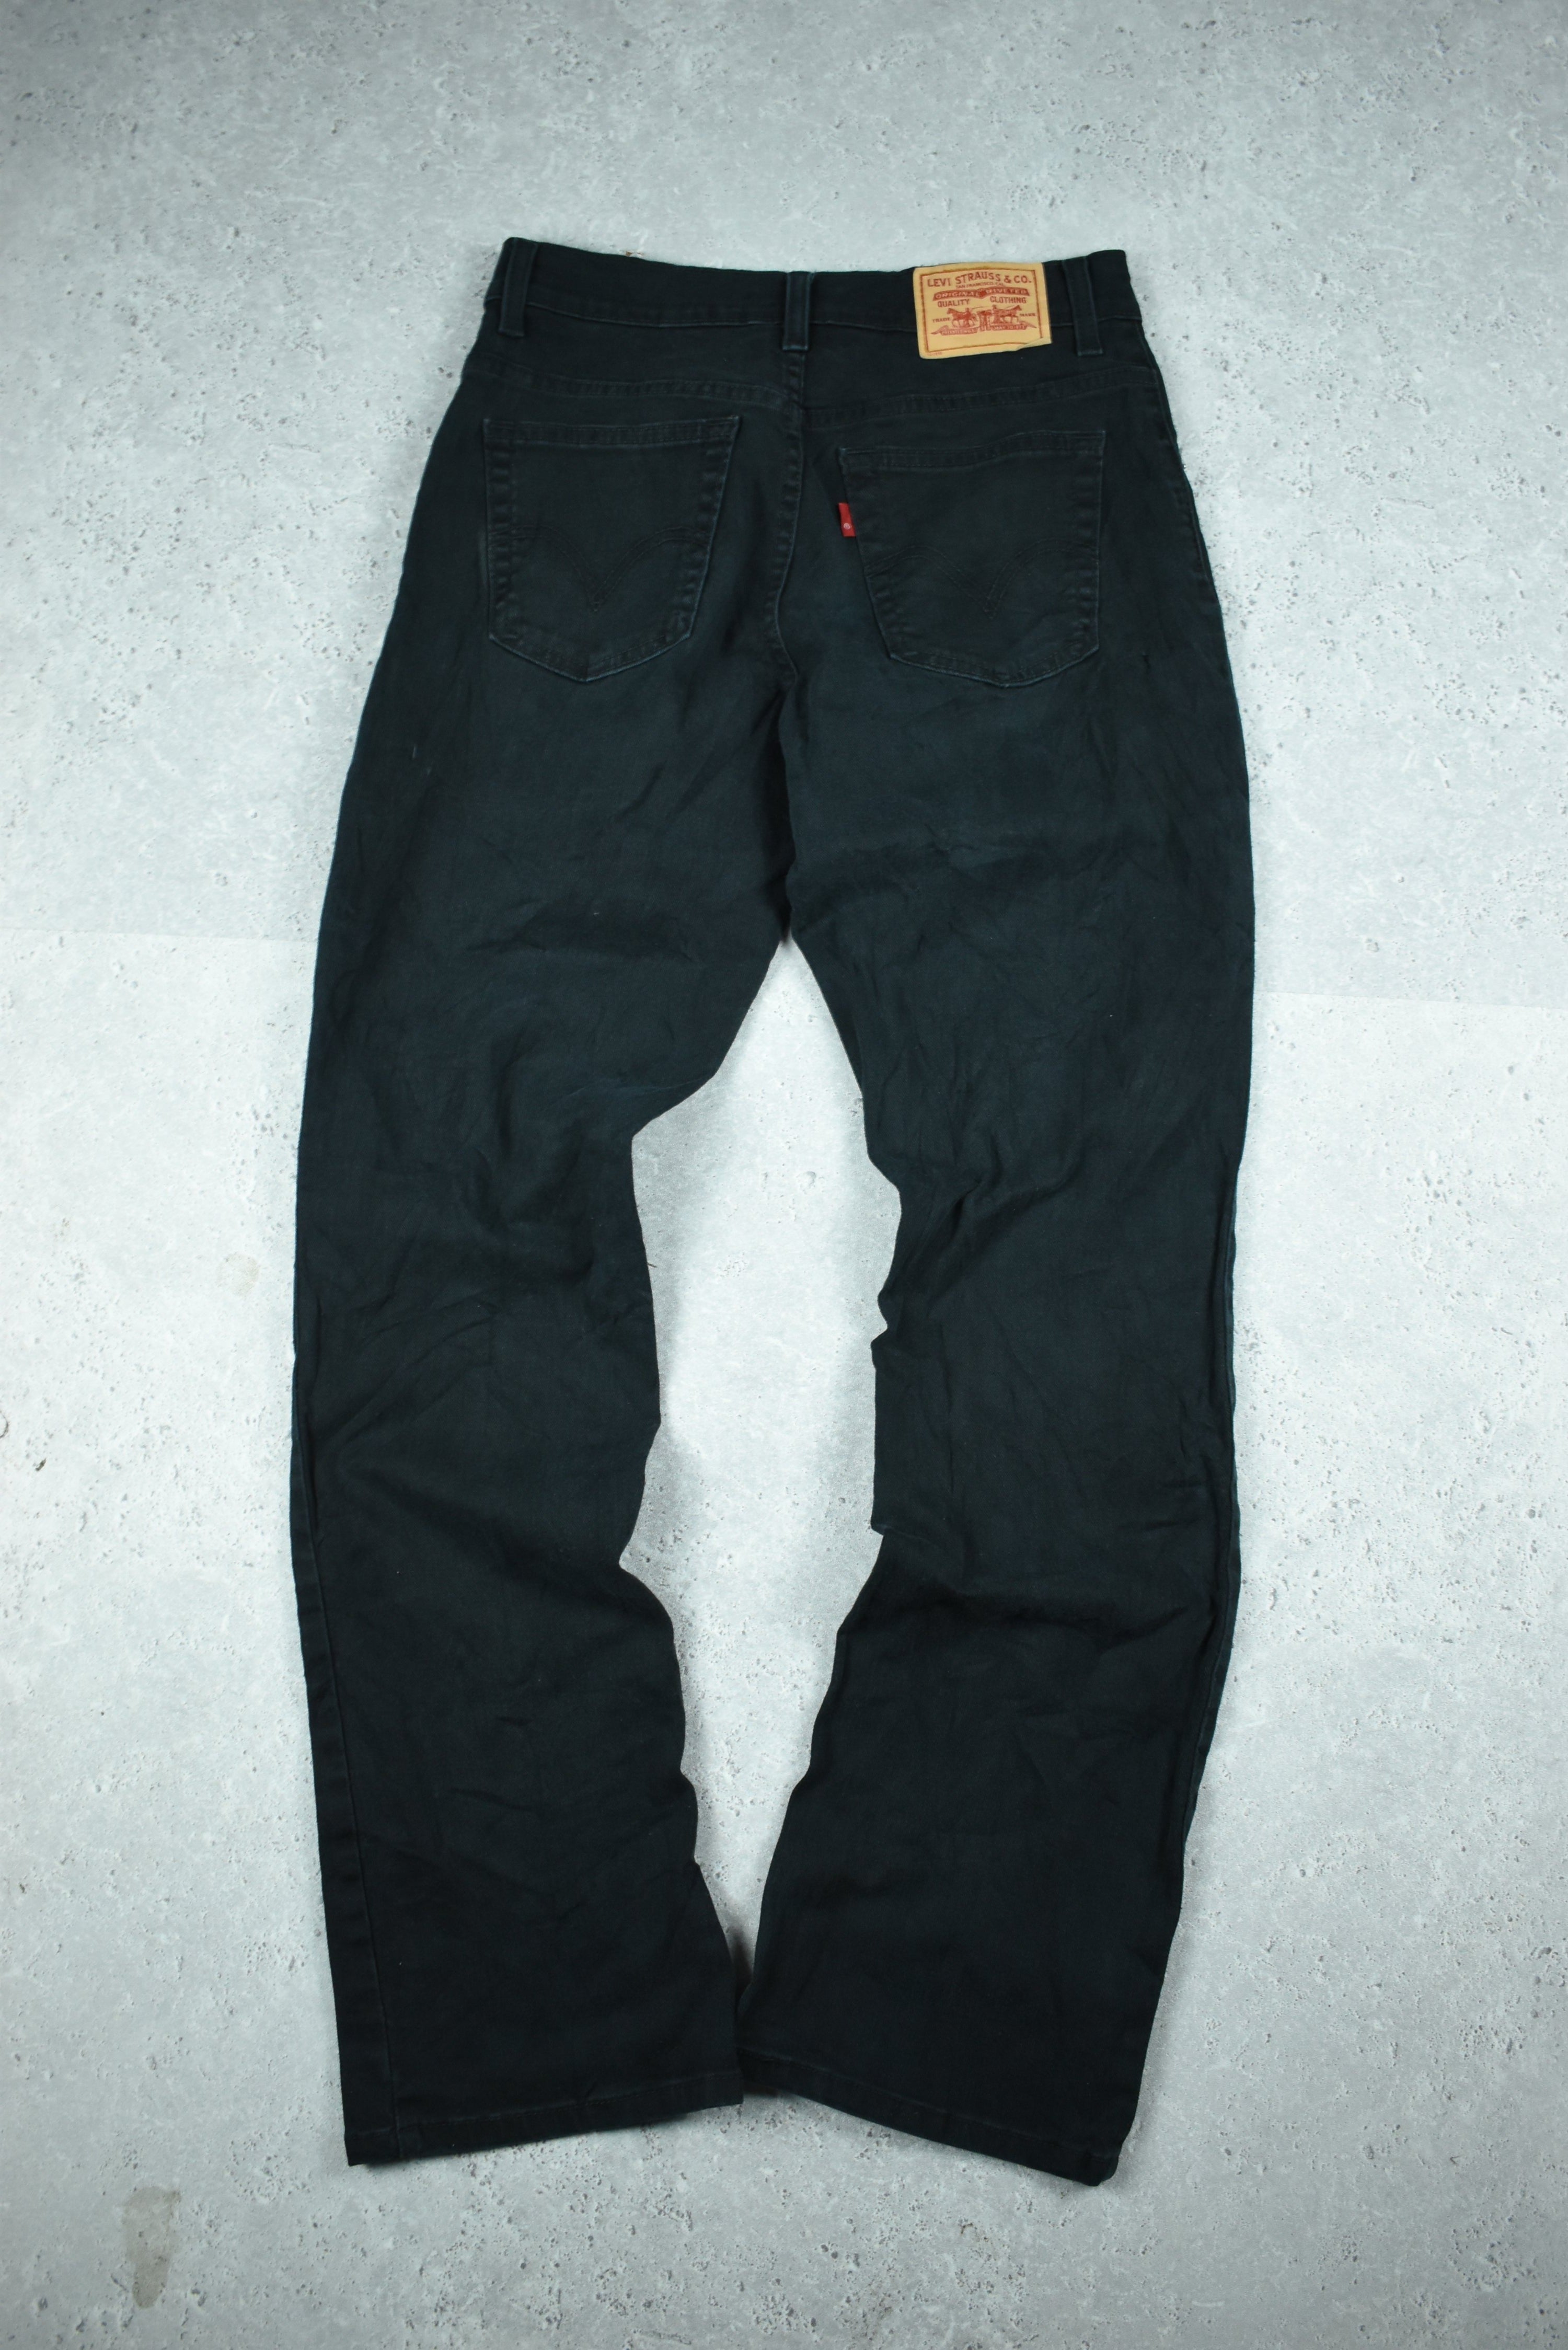 Vintage Levis Women's 550 Black Jeans Relaxed Boot Cut Size 6